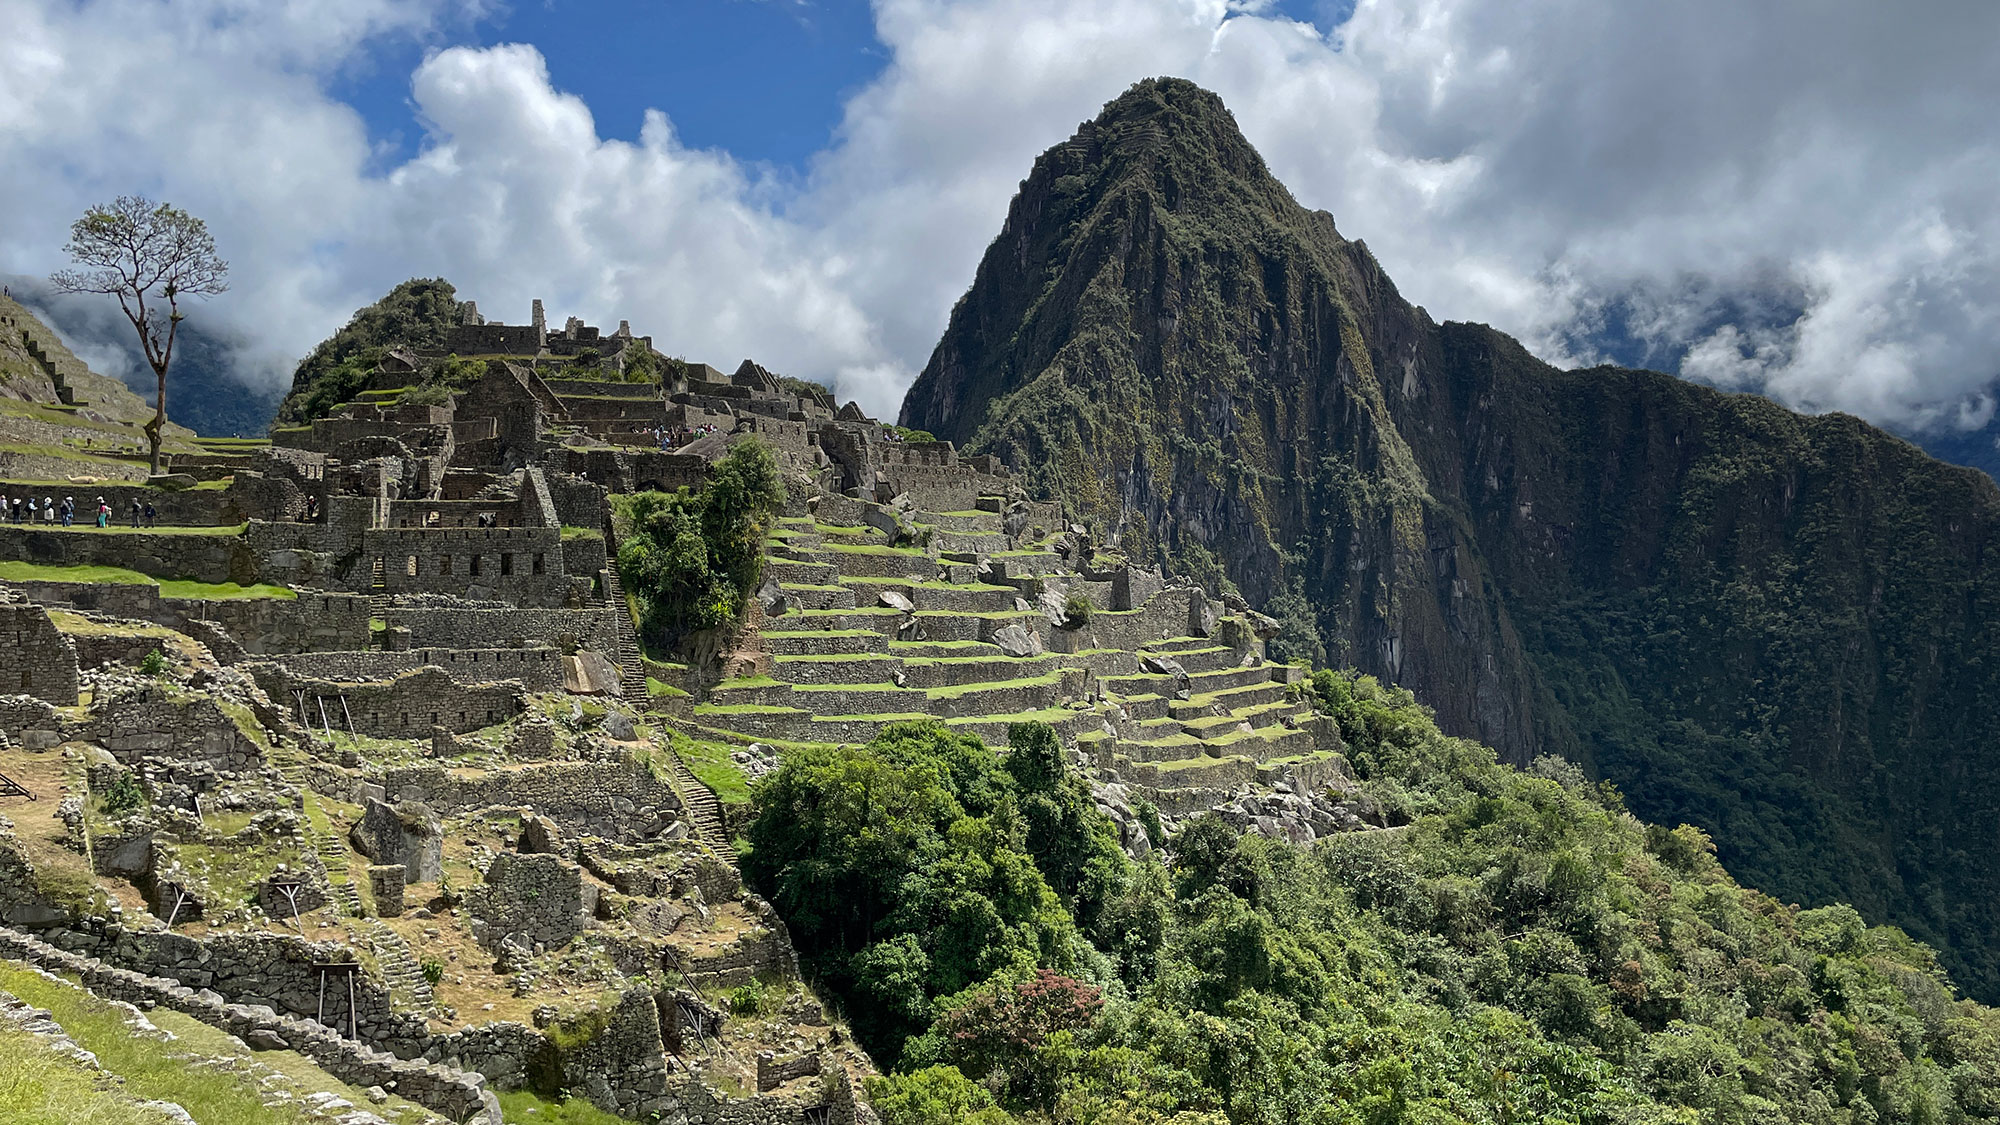 Landslide near Machu Picchu in Peru, 2 people missing and 12 injured